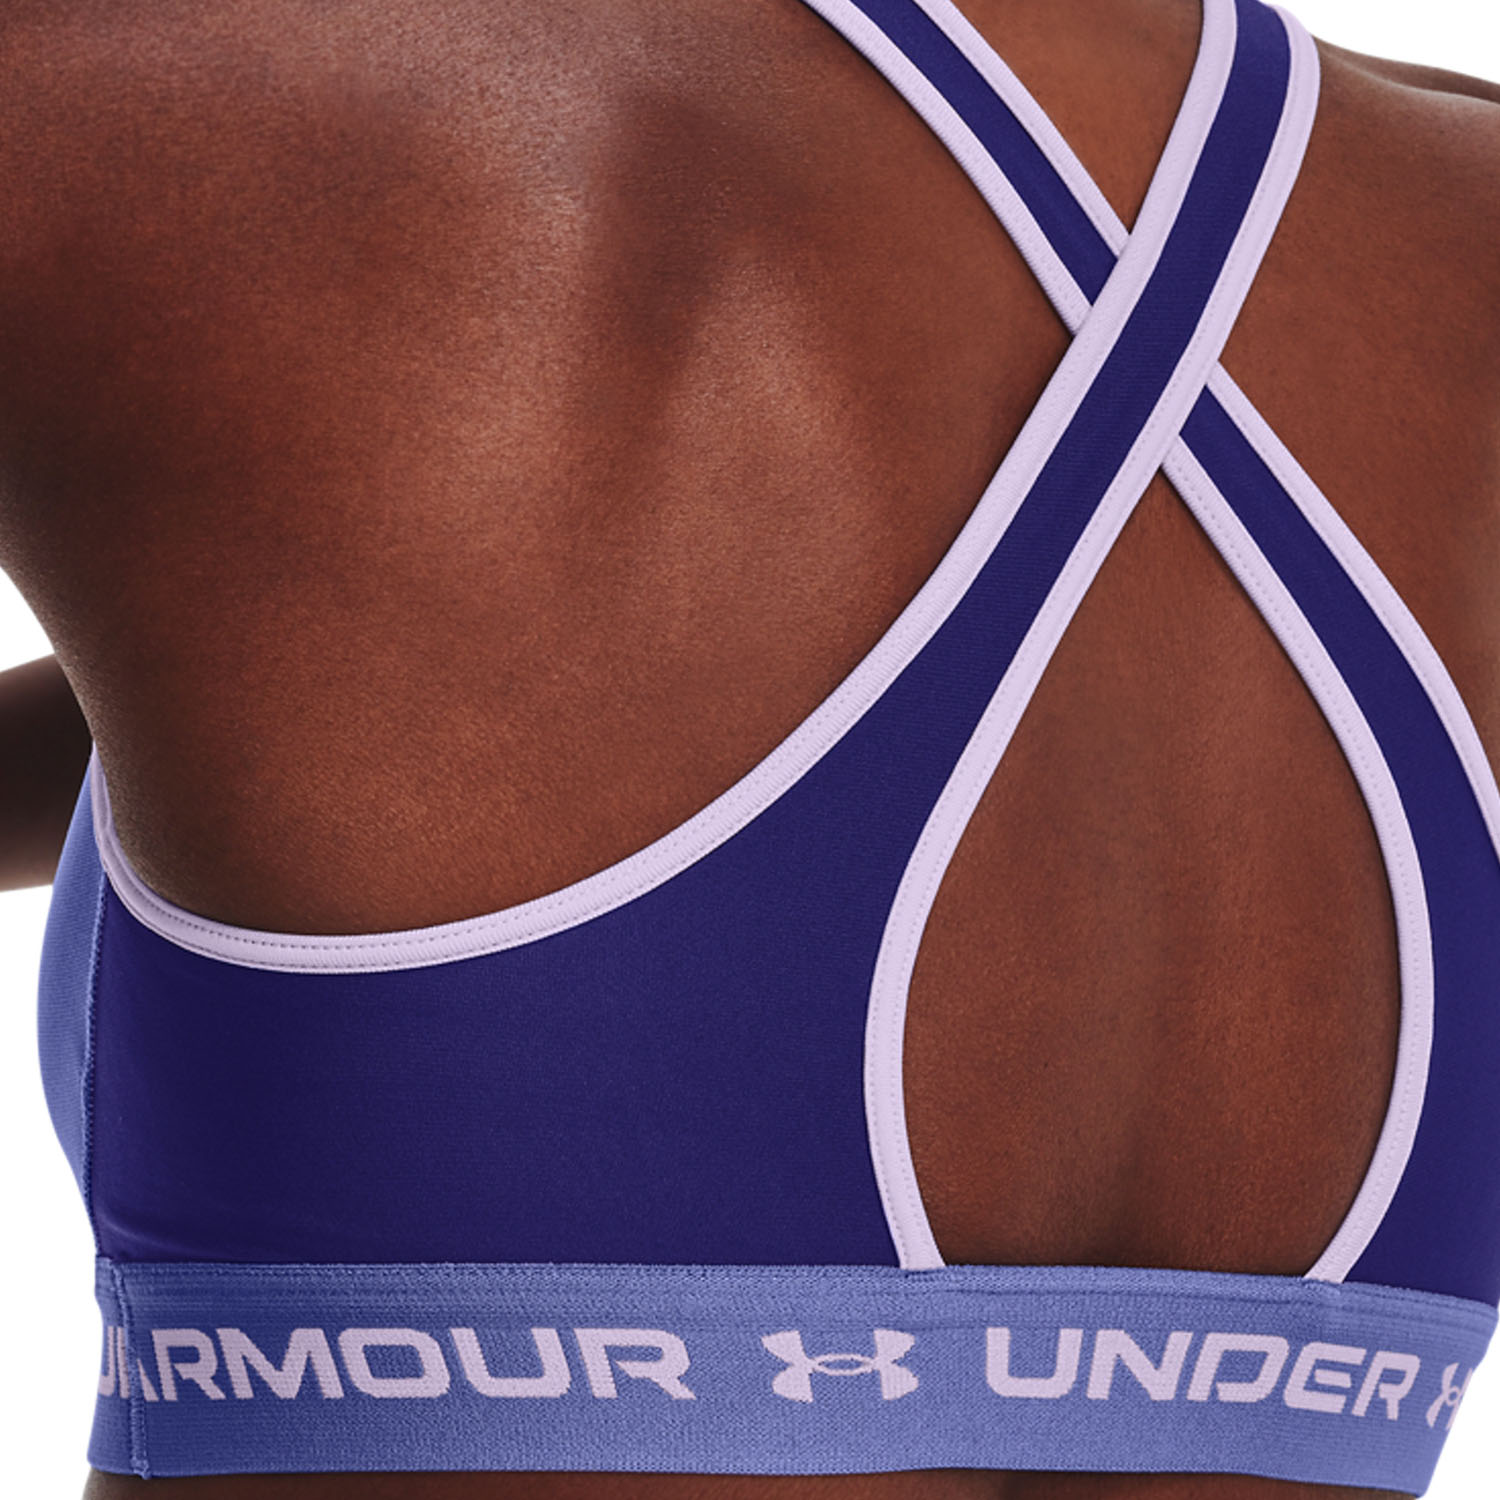 Under Armour sports bra in blue